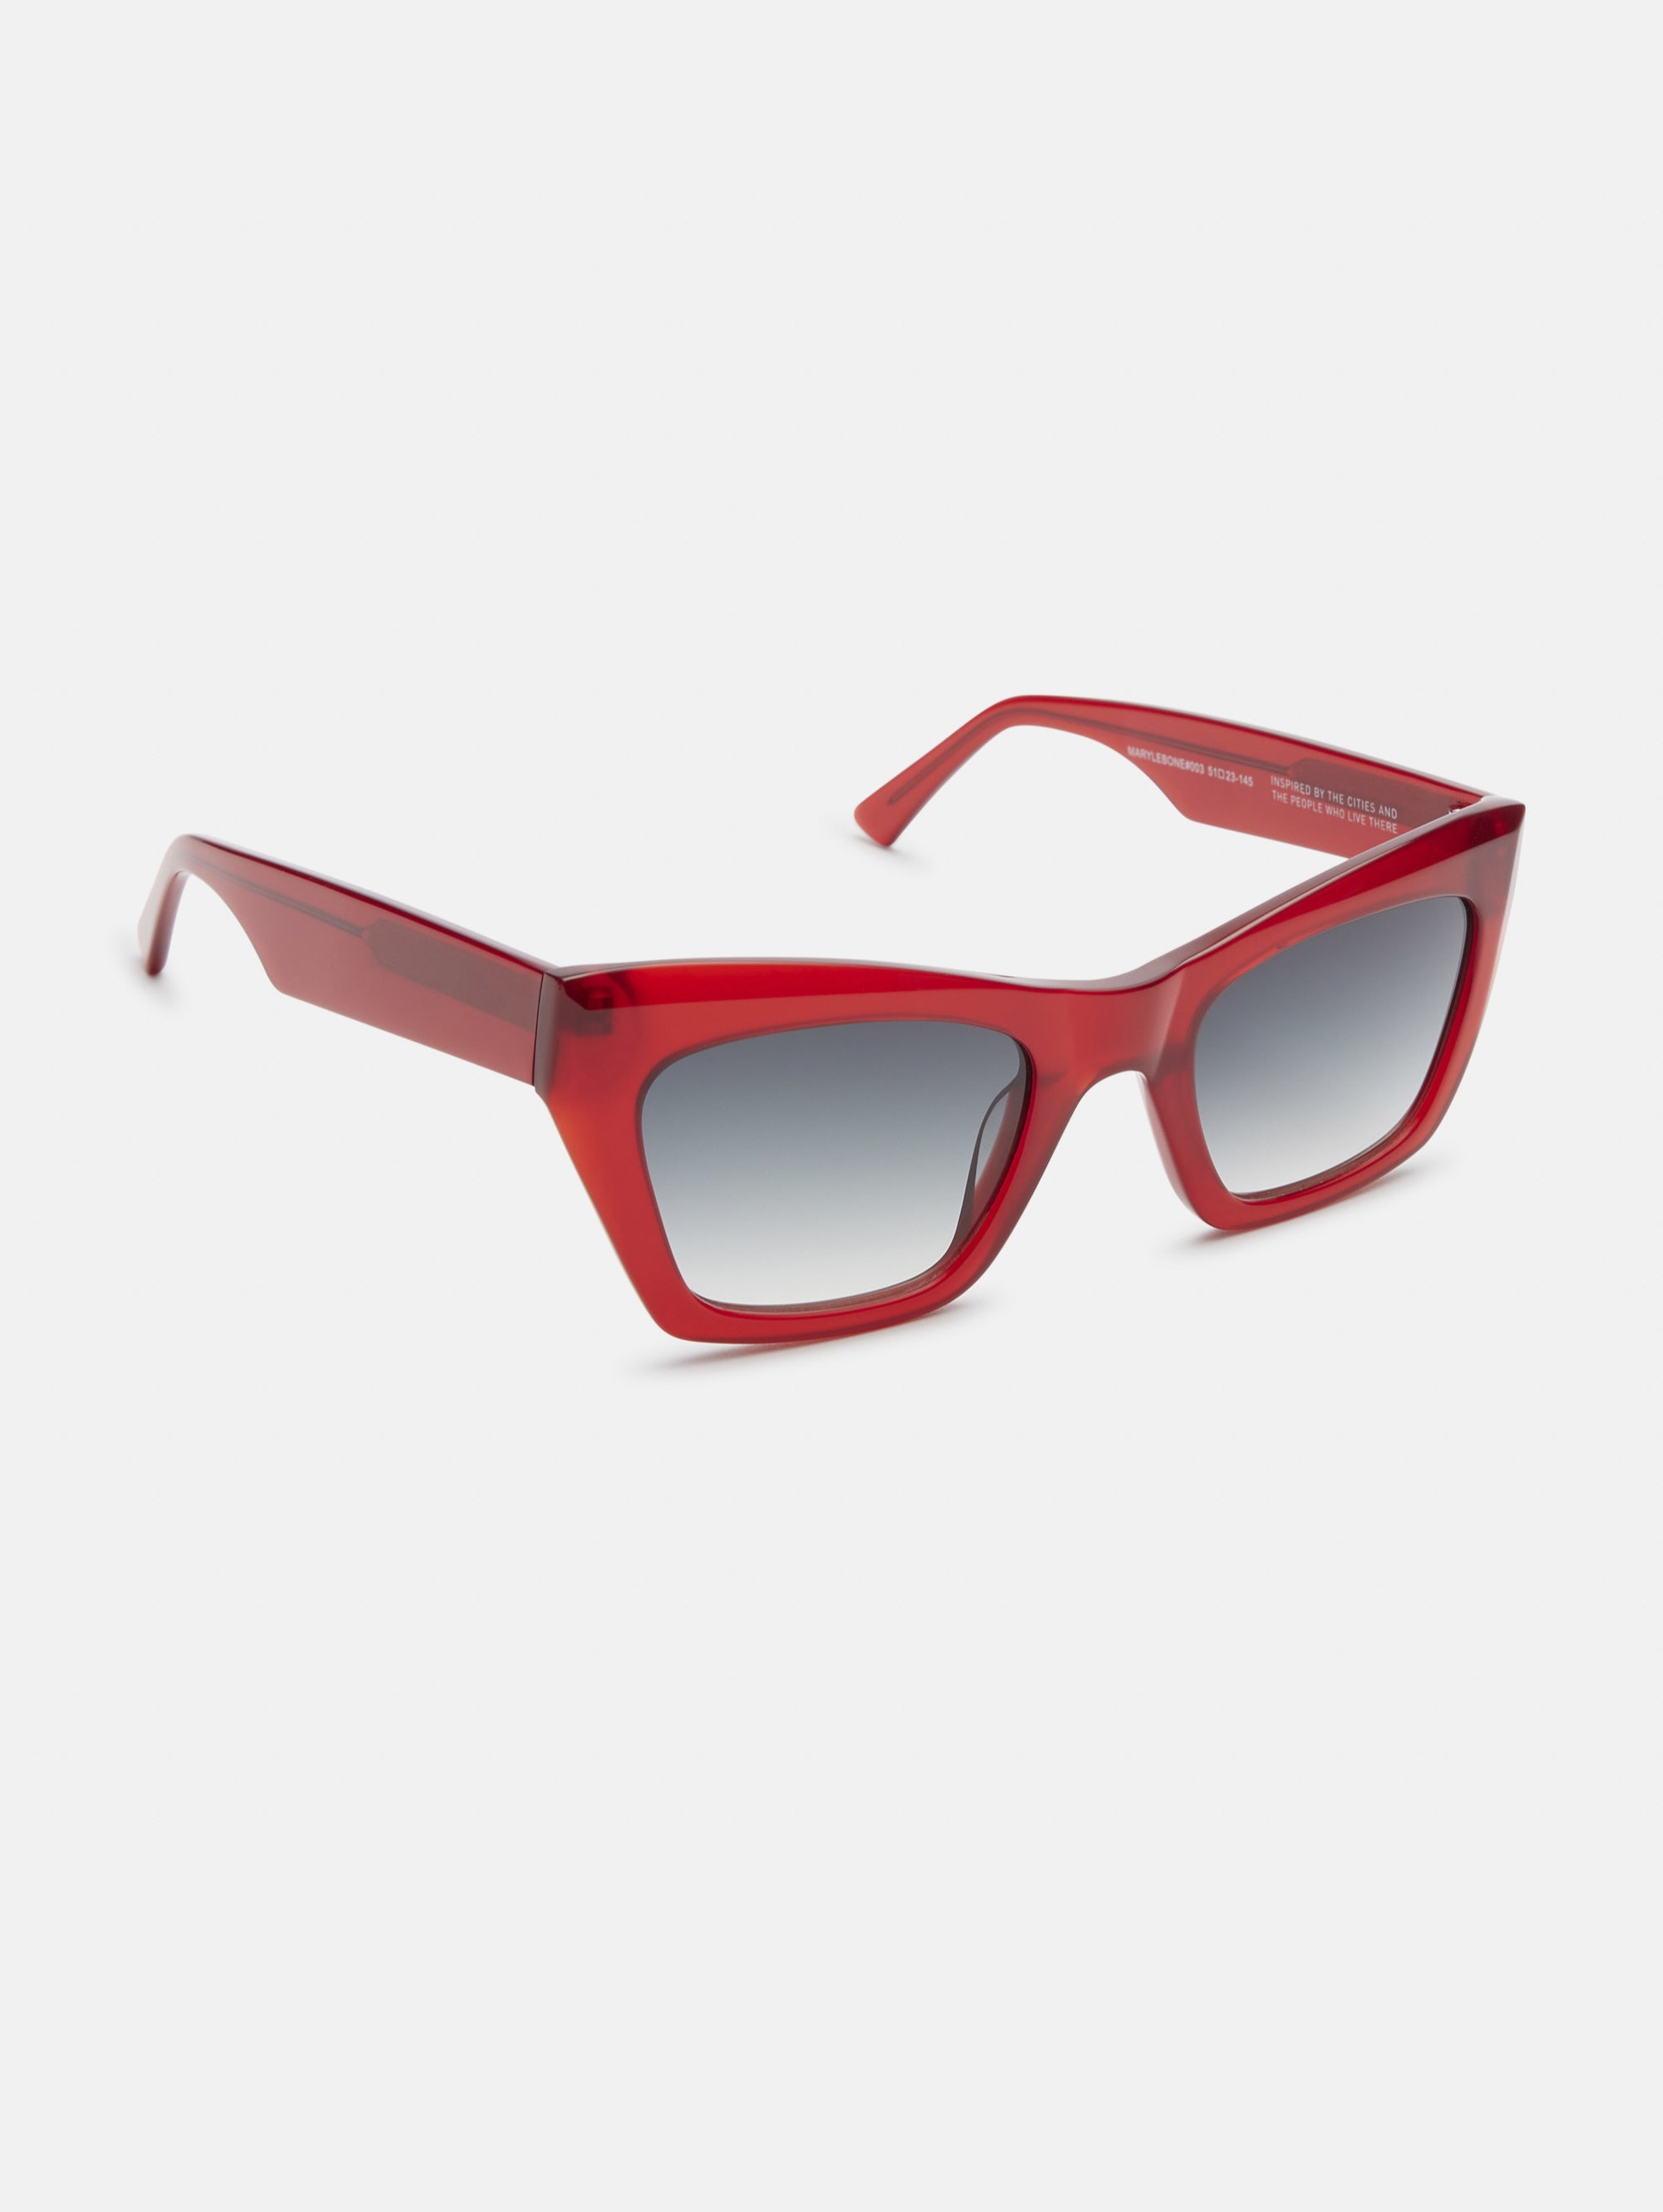 Maryle Bone Red Sunglasses